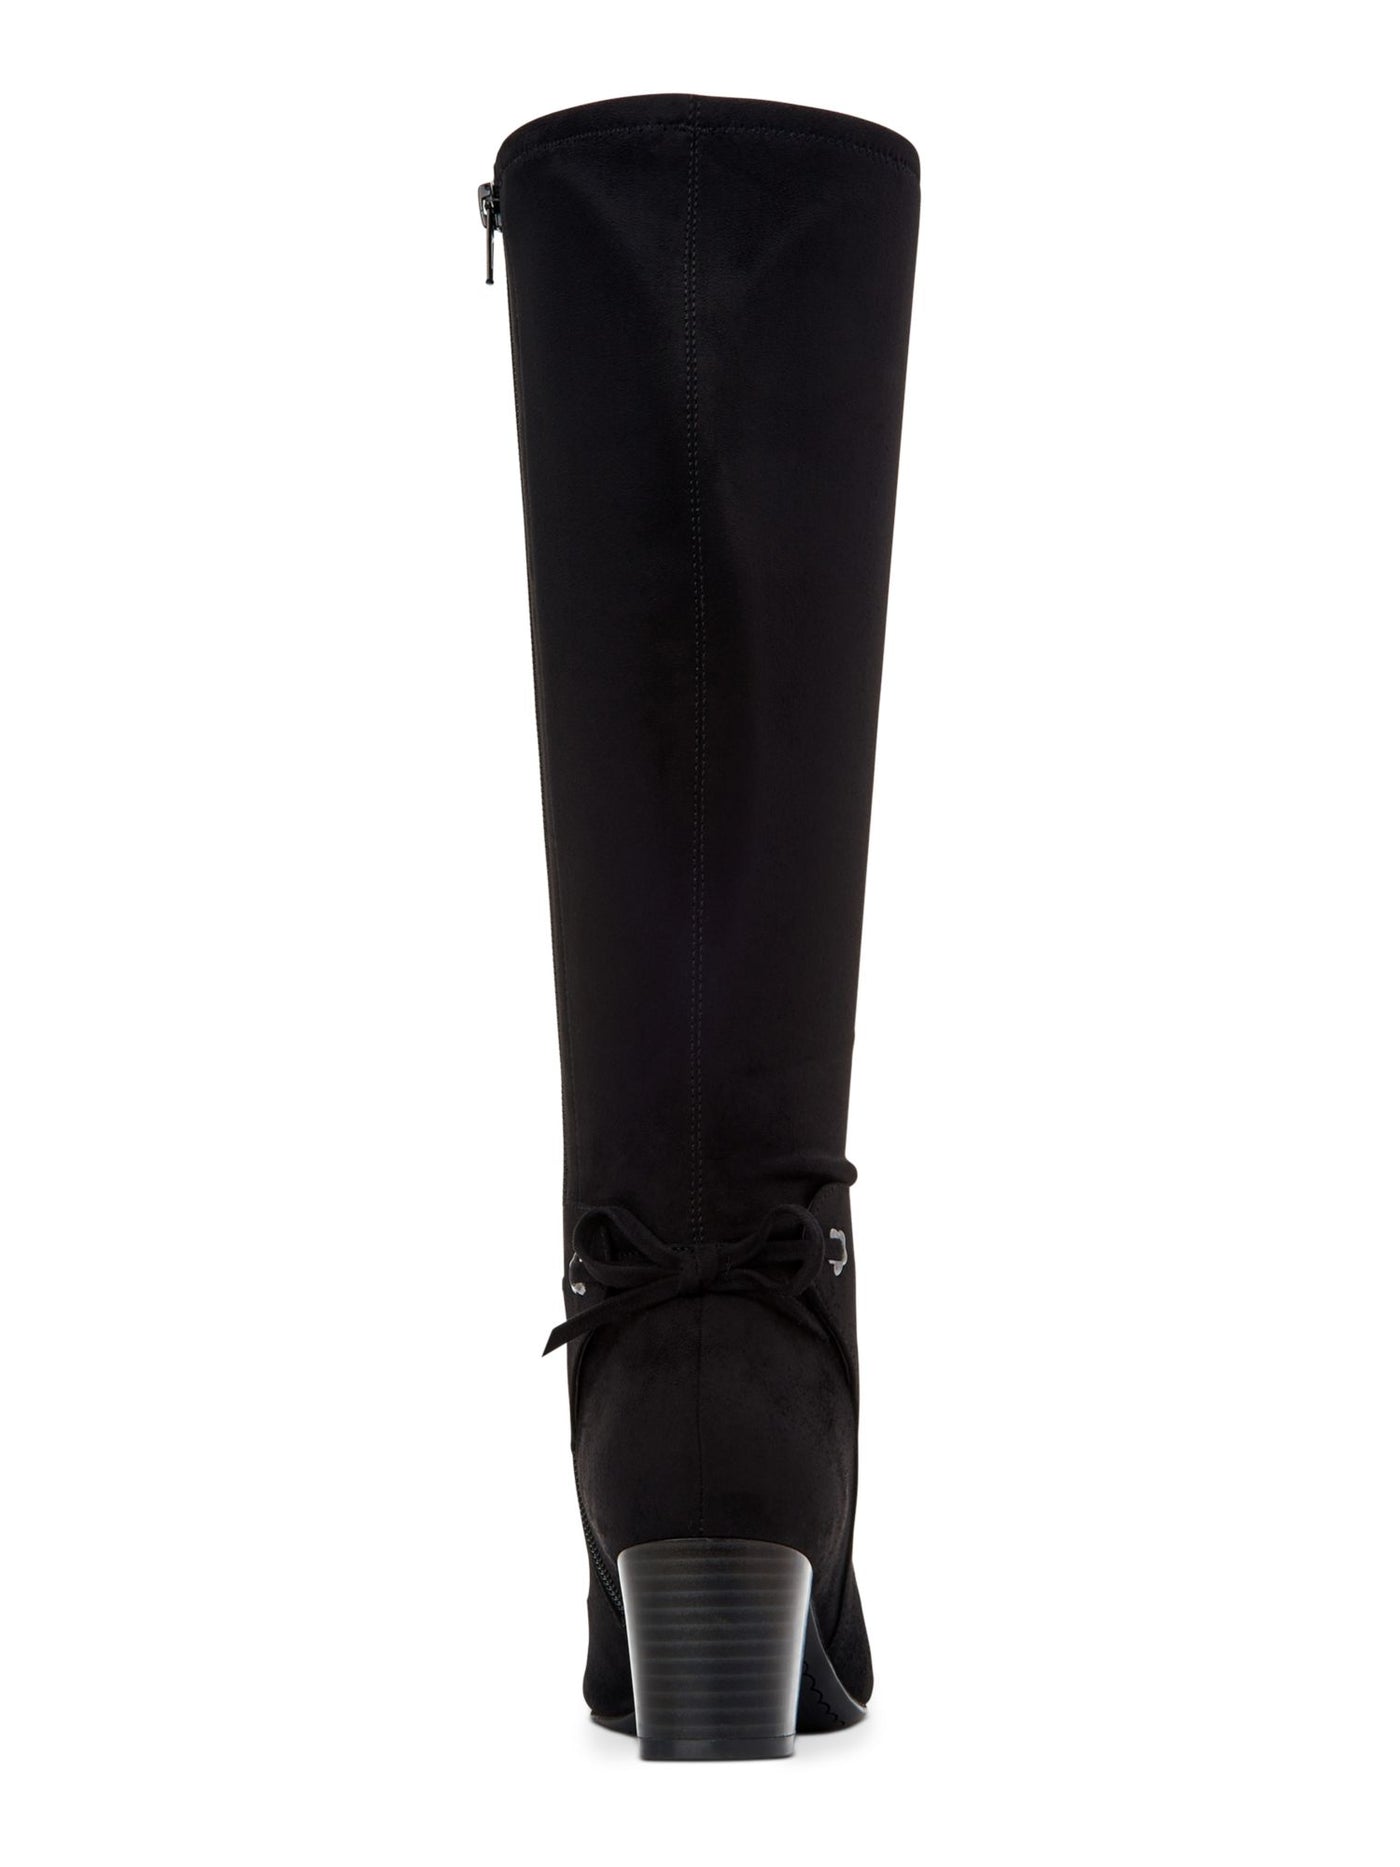 CHARTER CLUB Womens Black Bow Accent Almond Toe Block Heel Zip-Up Dress Boots 7